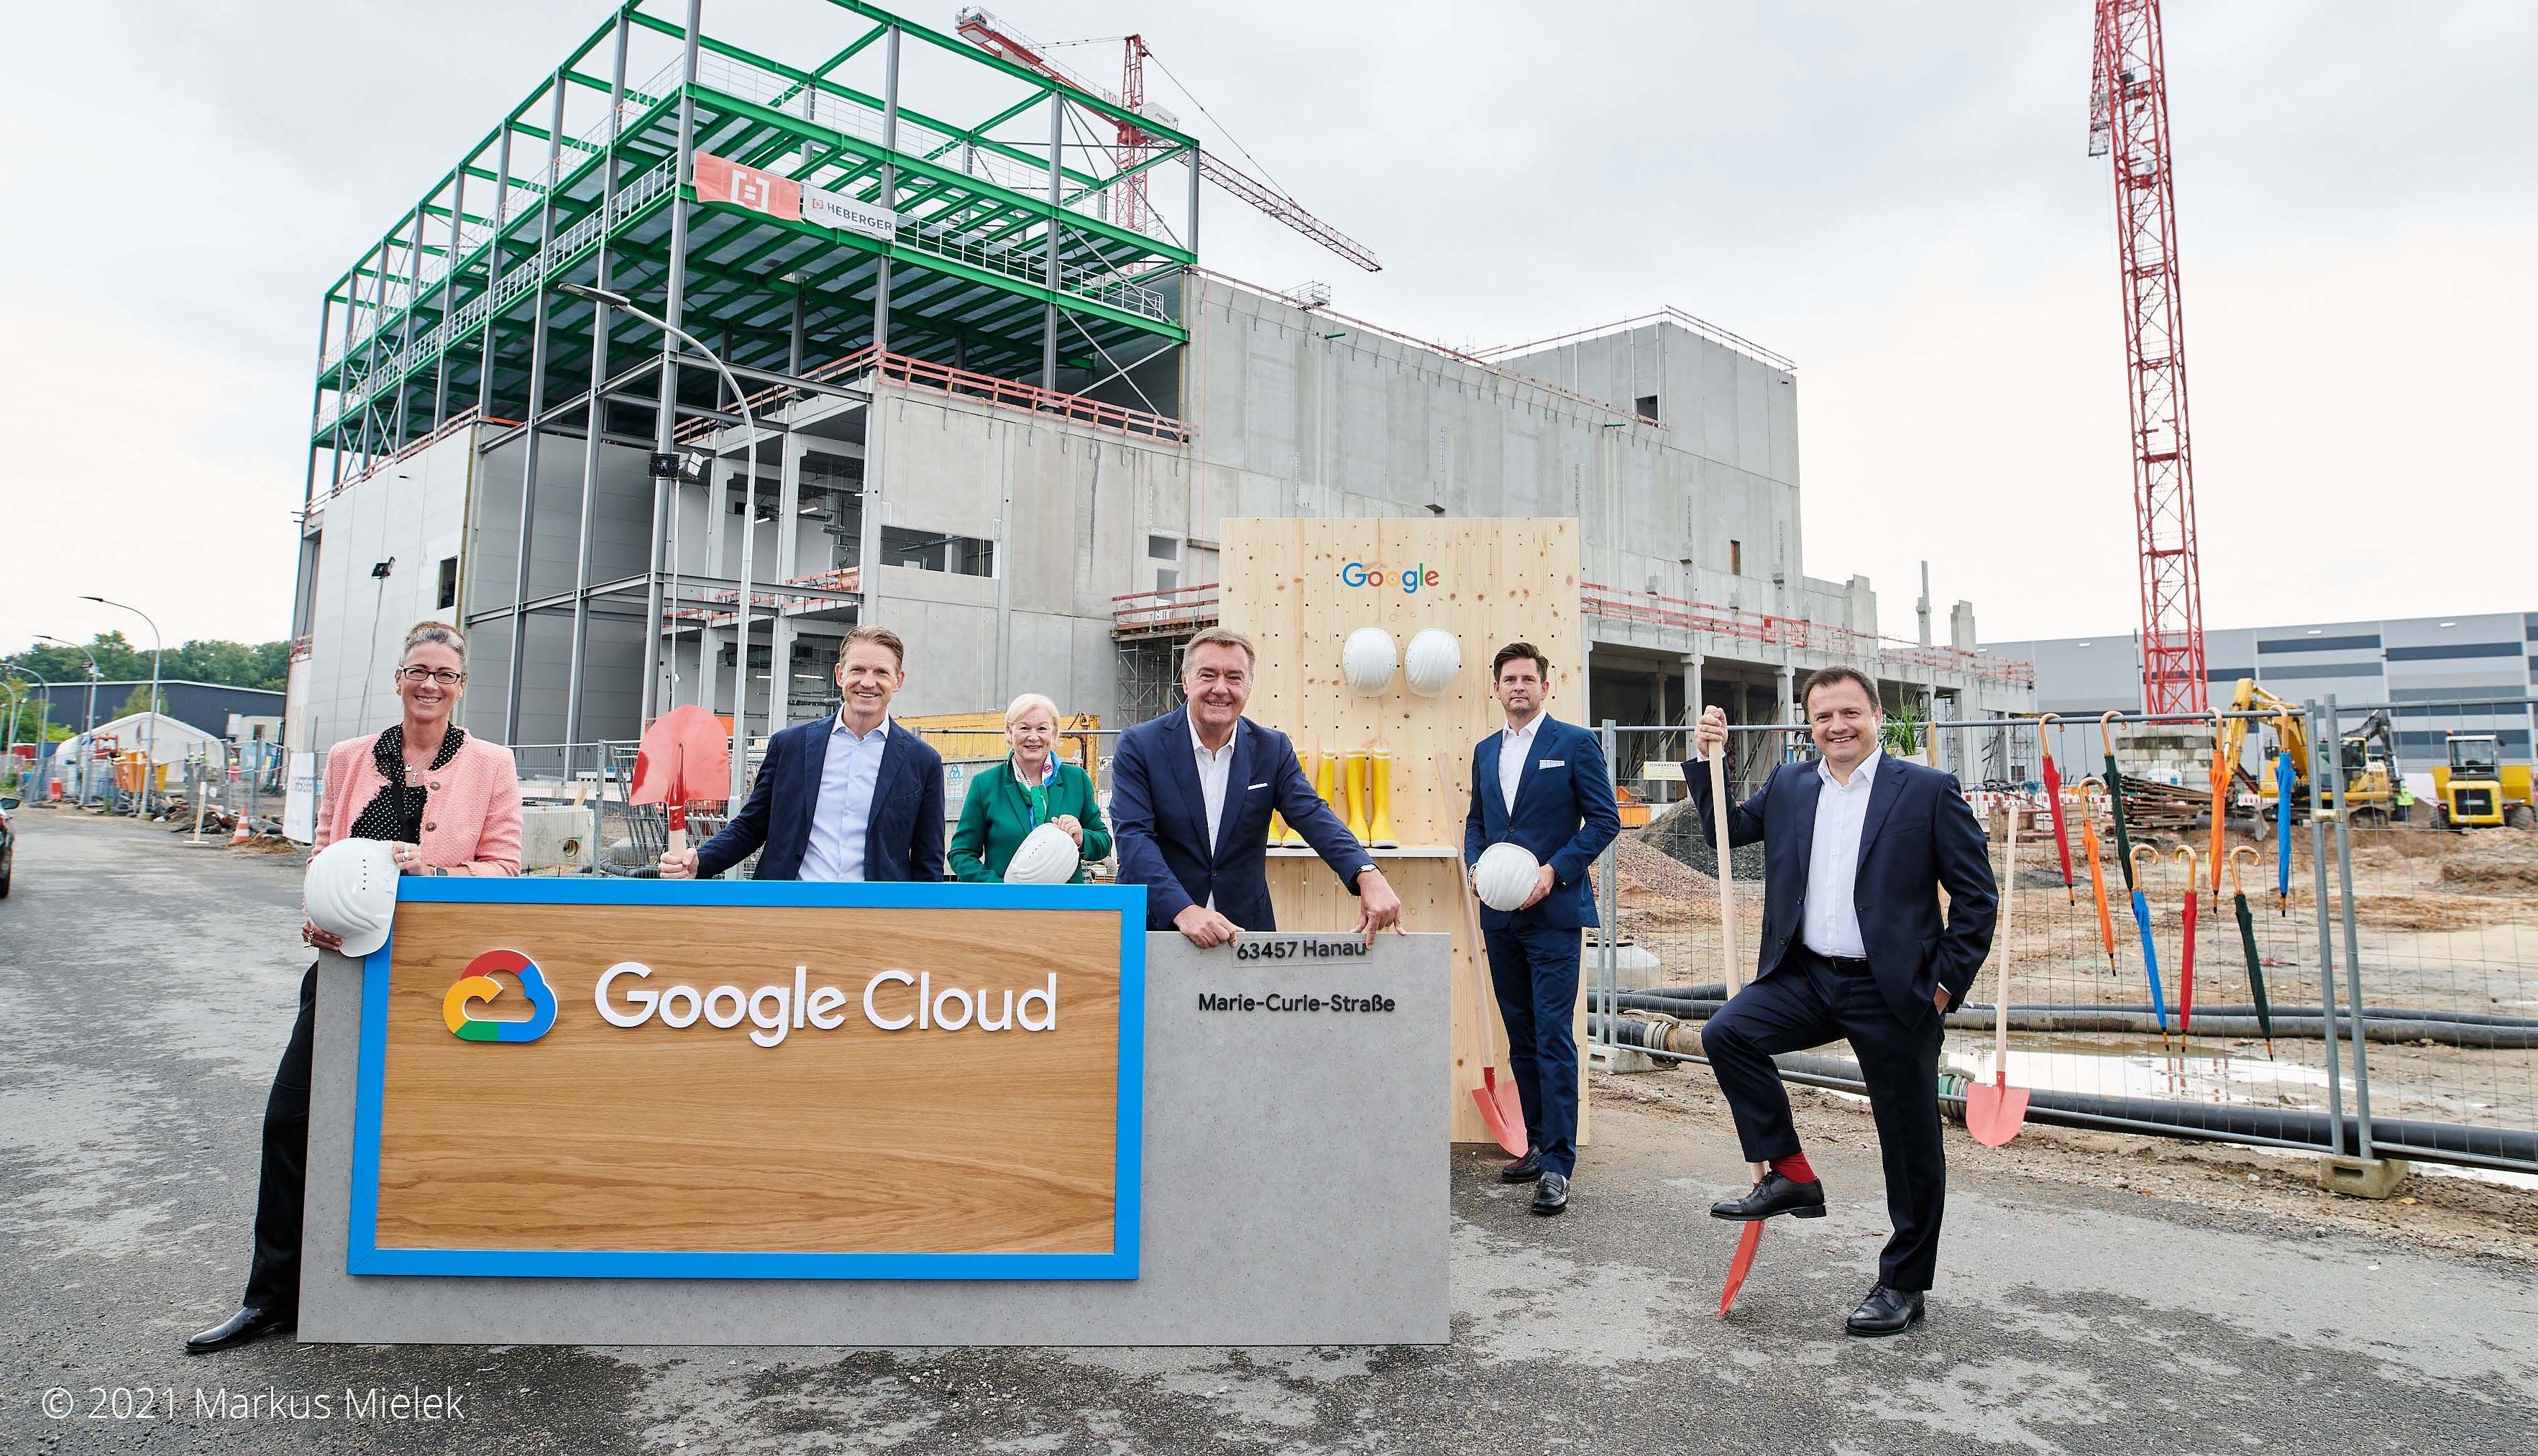 NDC-GARBE's development in Hanau (Frankfurt area) for Google Cloud